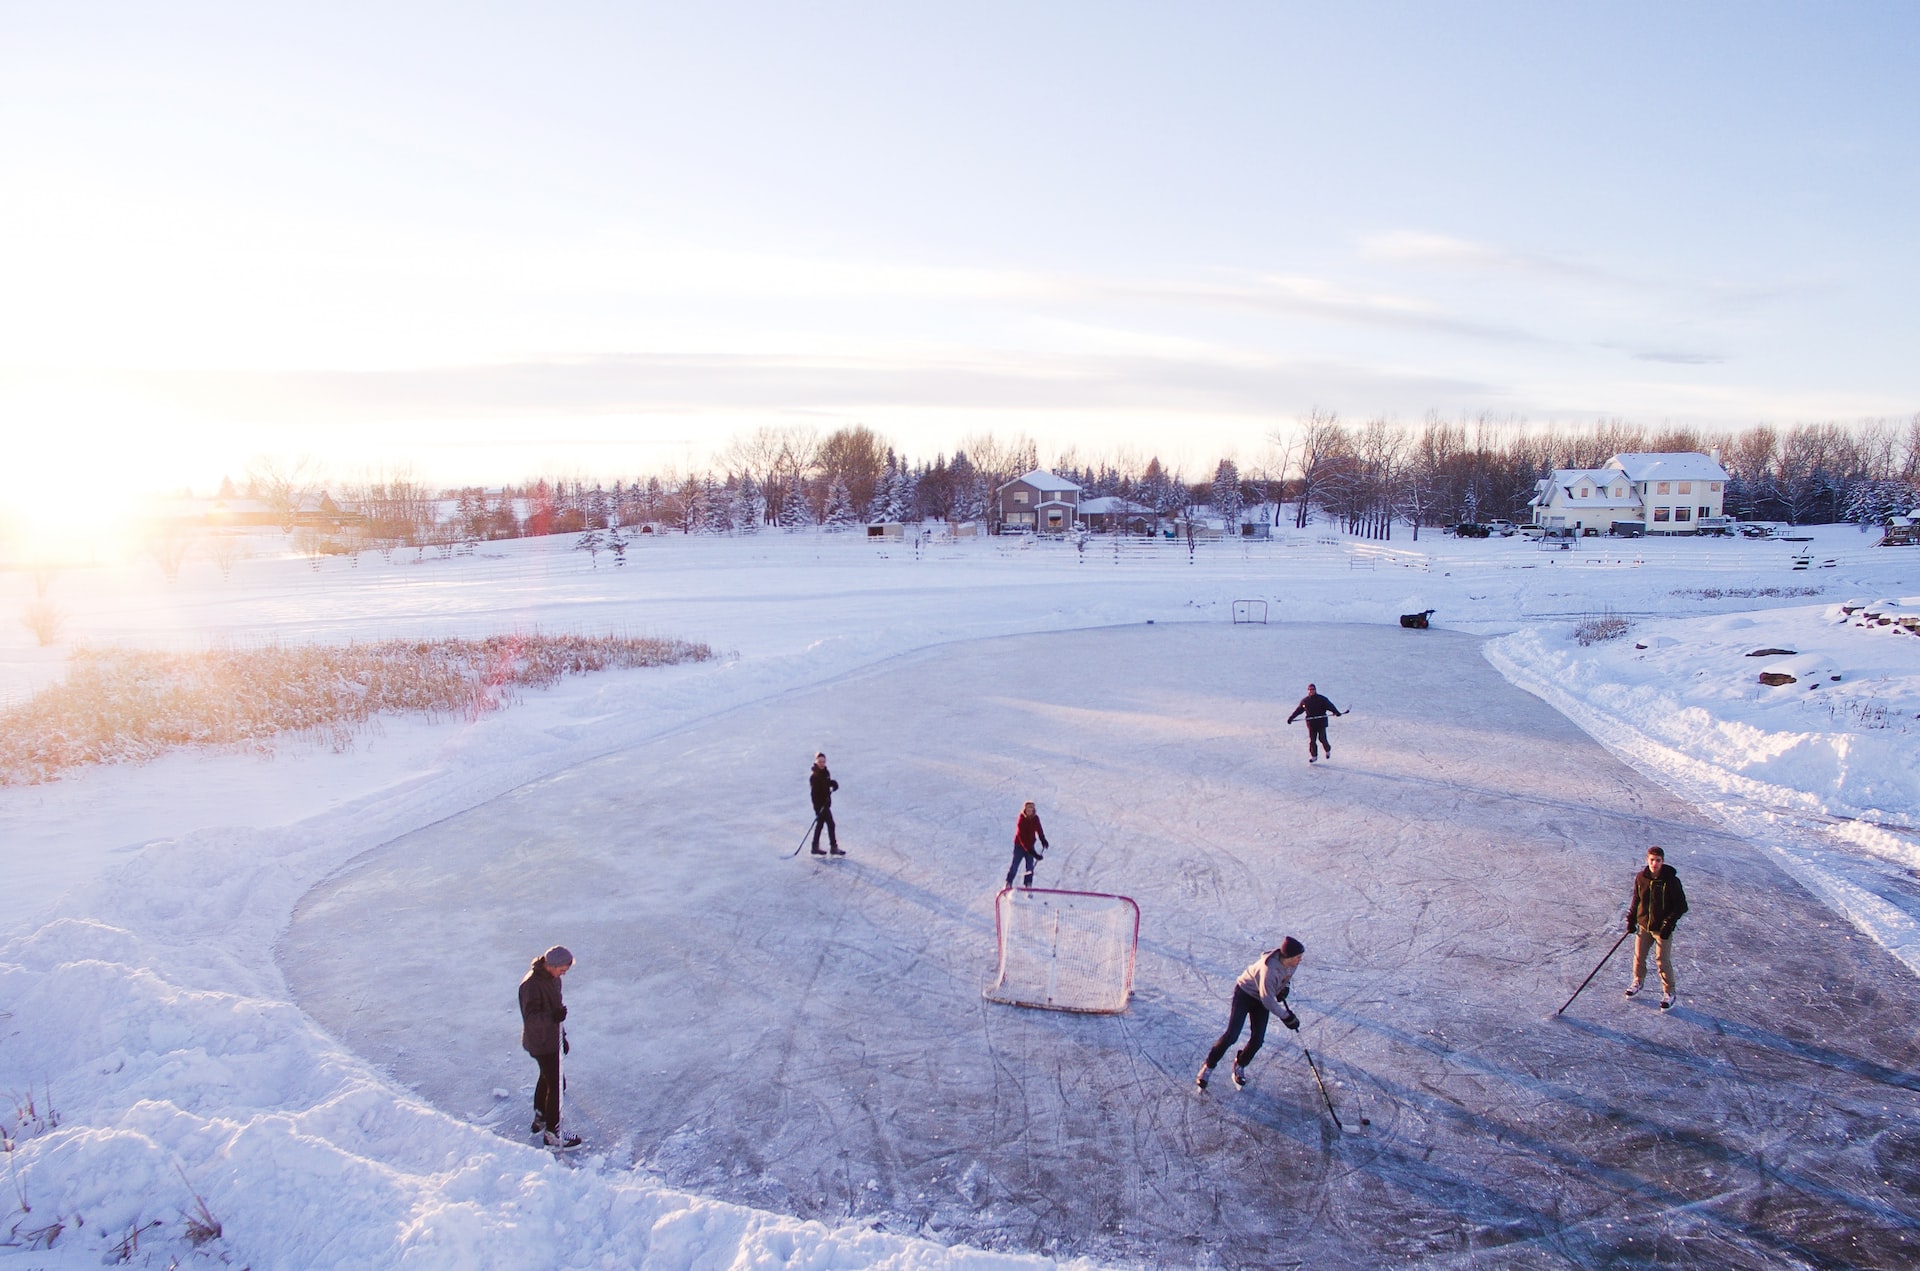 The Hockey Lodge - The Minnesota Wild 2022 NHL Winter Classic